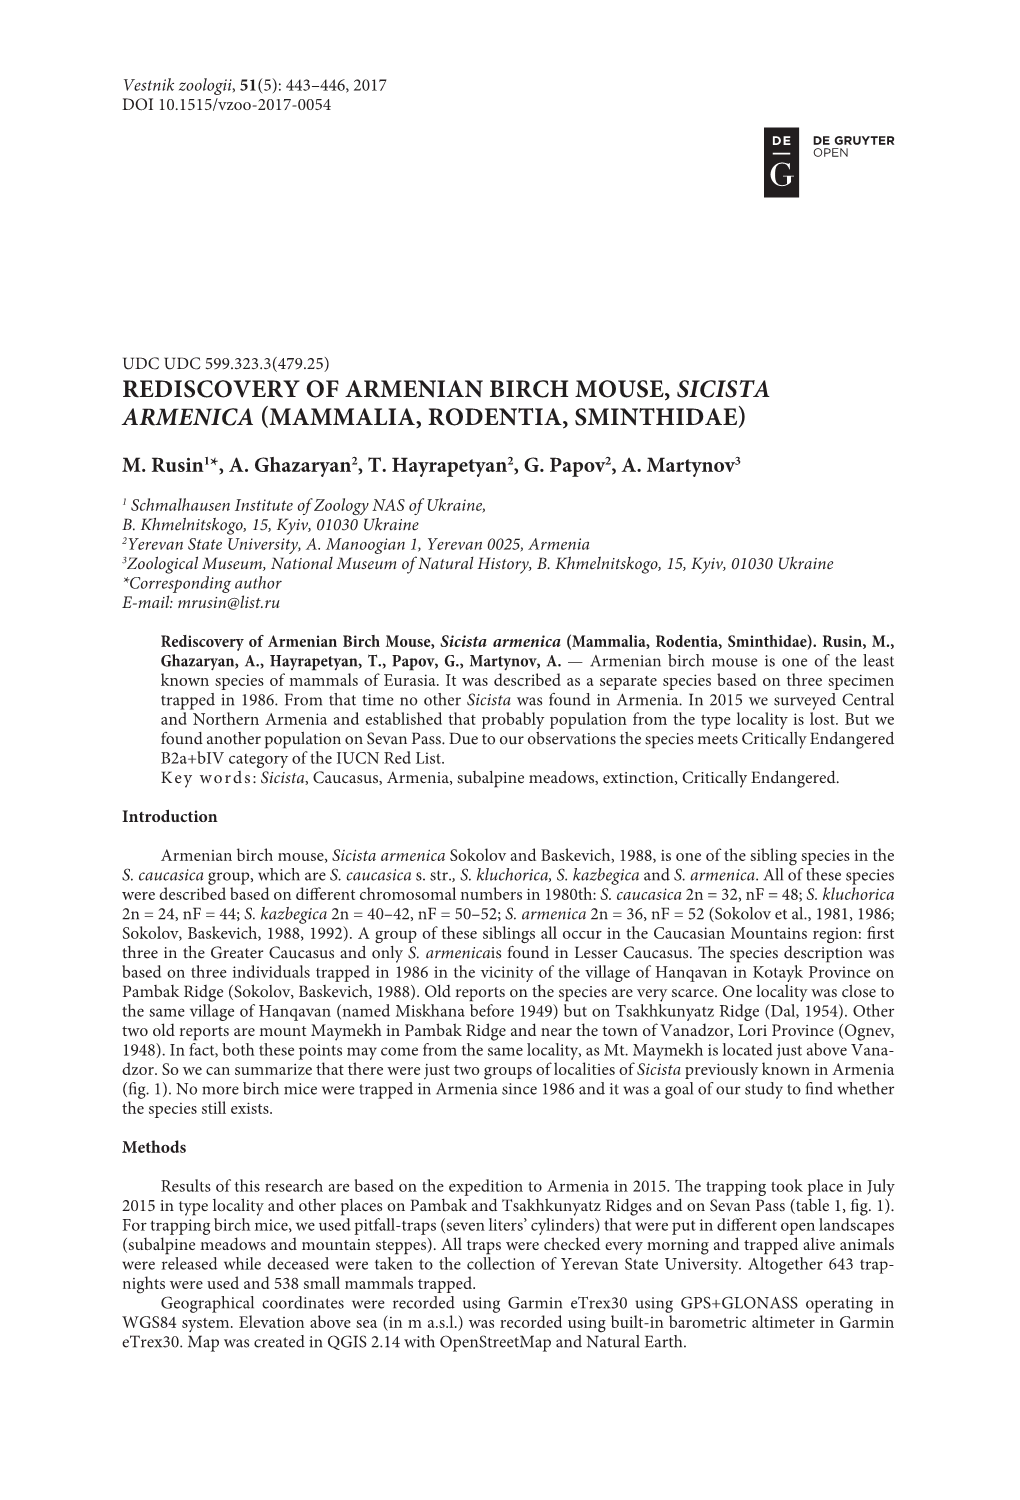 Rediscovery of Armenian Birch Mouse, Sicista Armenica (Mammalia, Rodentia, Sminthidae)